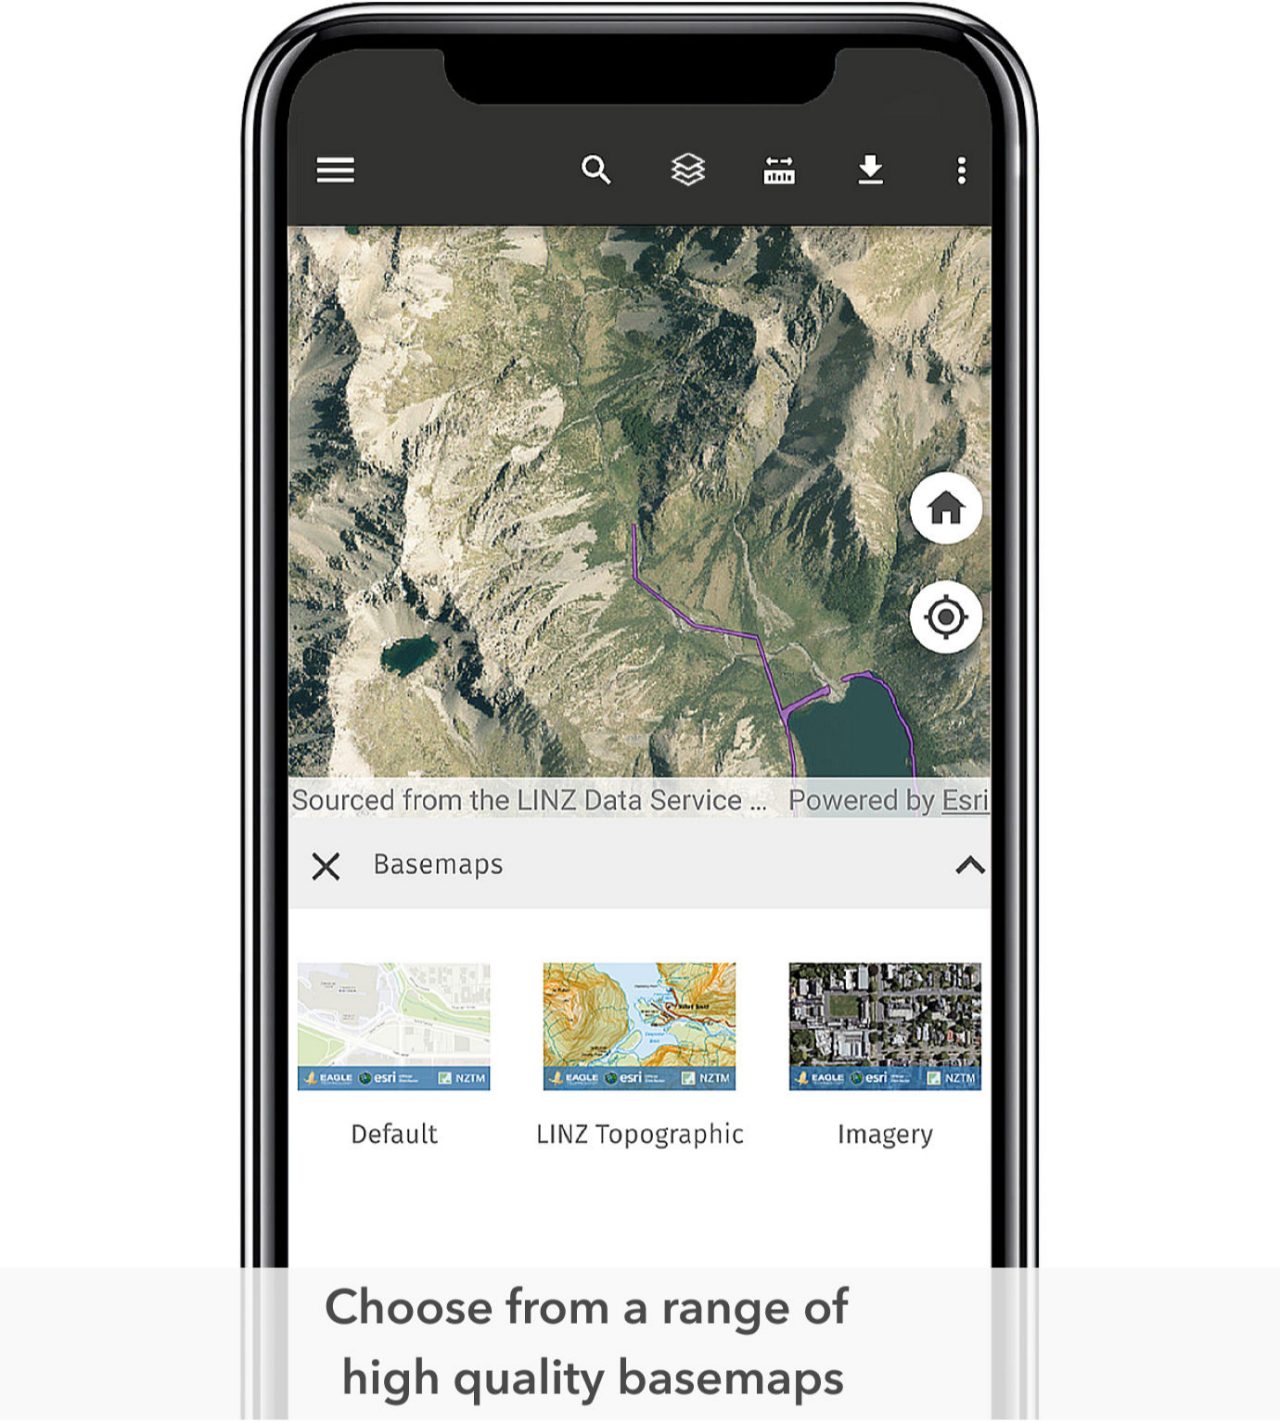 Basemap options displayed on phone